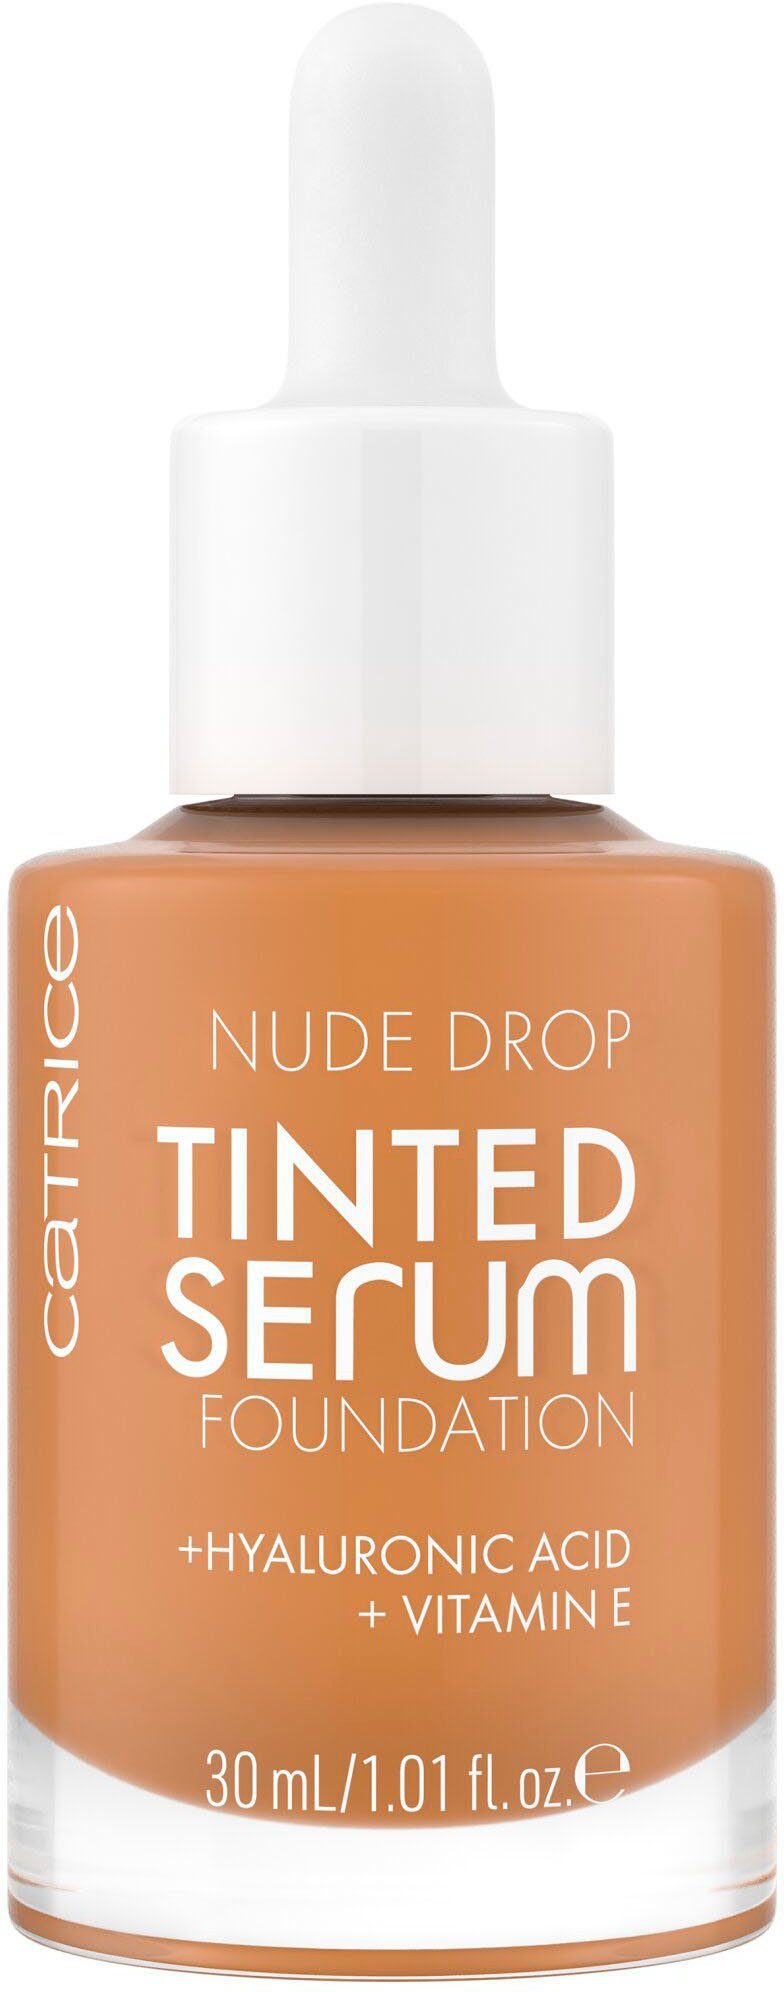 Catrice Foundation Nude 075C nude Foundation Serum Drop Tinted